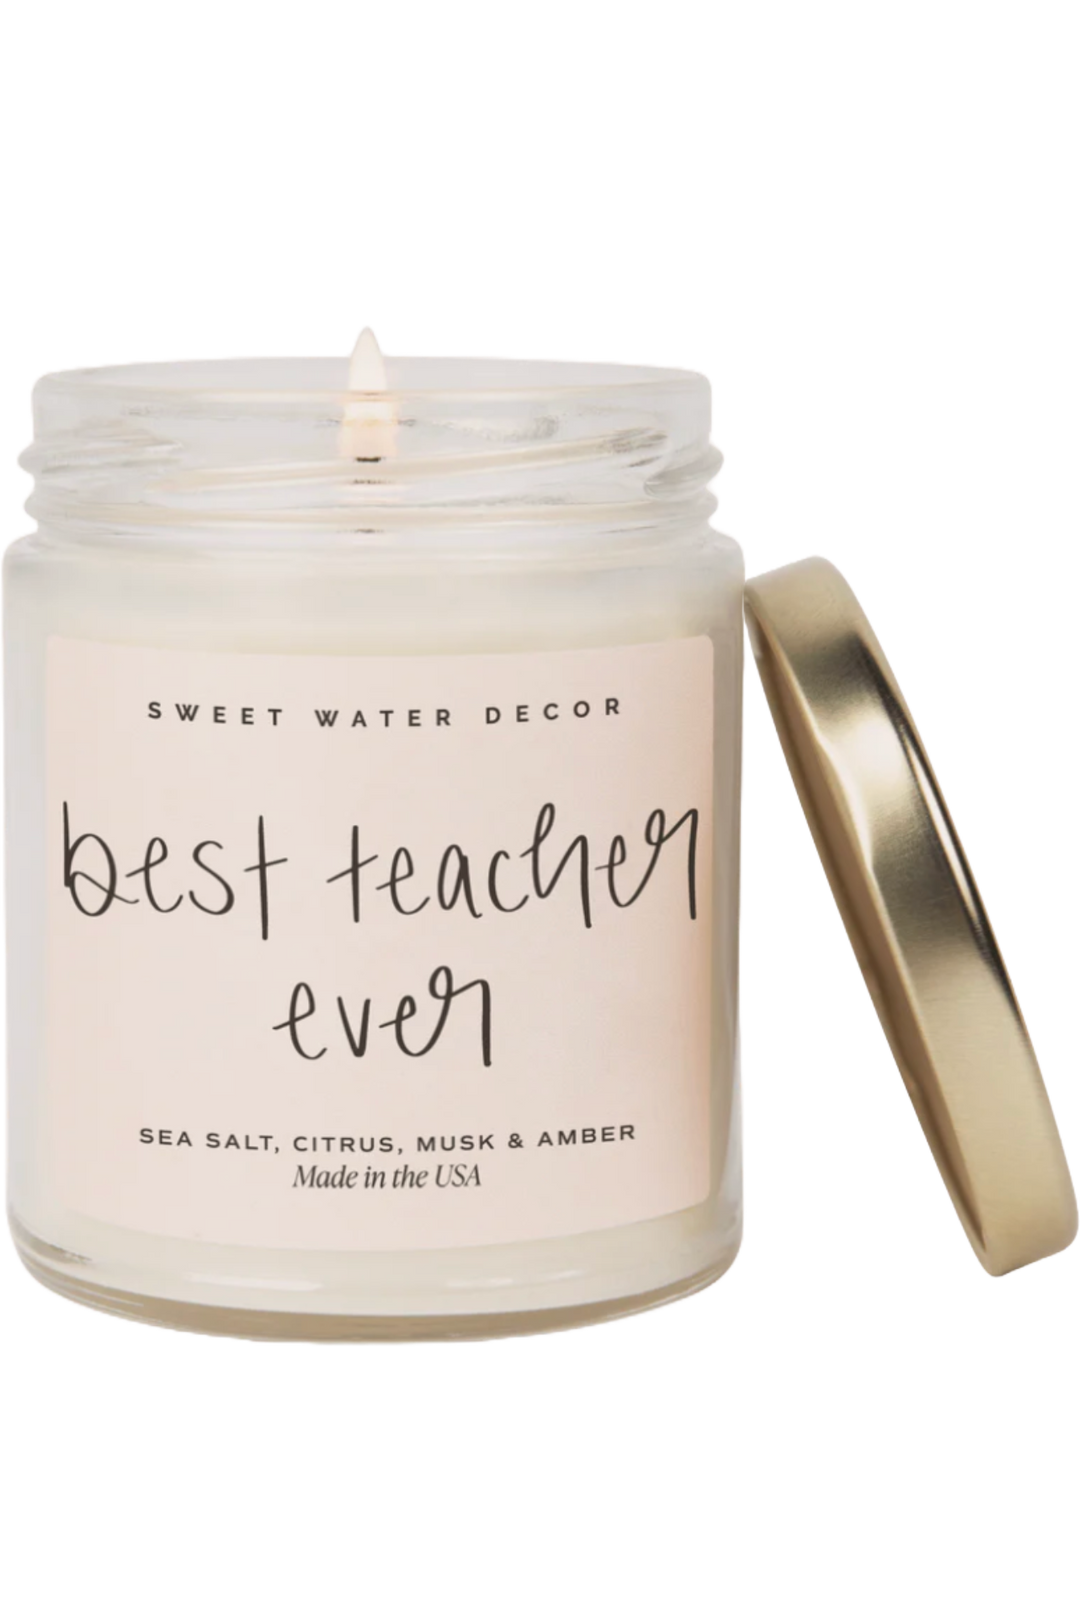 "Best Teacher Ever" Candle